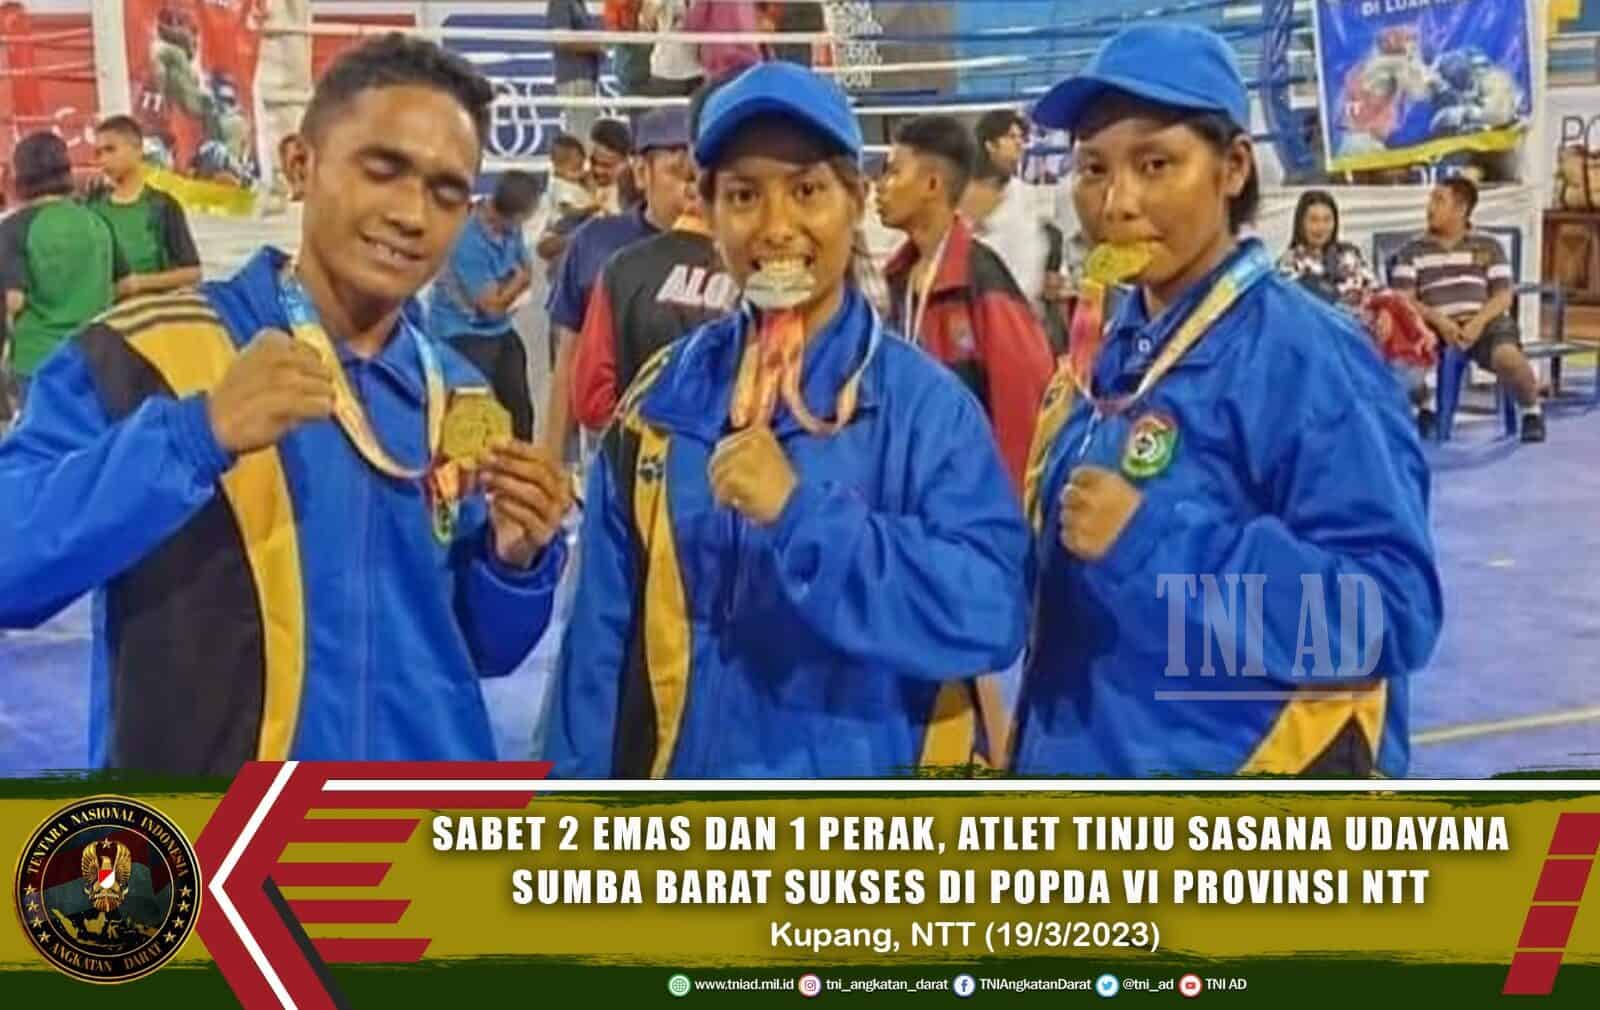 Sabet 2 Emas dan 1 Perak, Atlet Tinju Sasana Udayana Sumba Barat Sukses di Popda VI Provinsi NTT